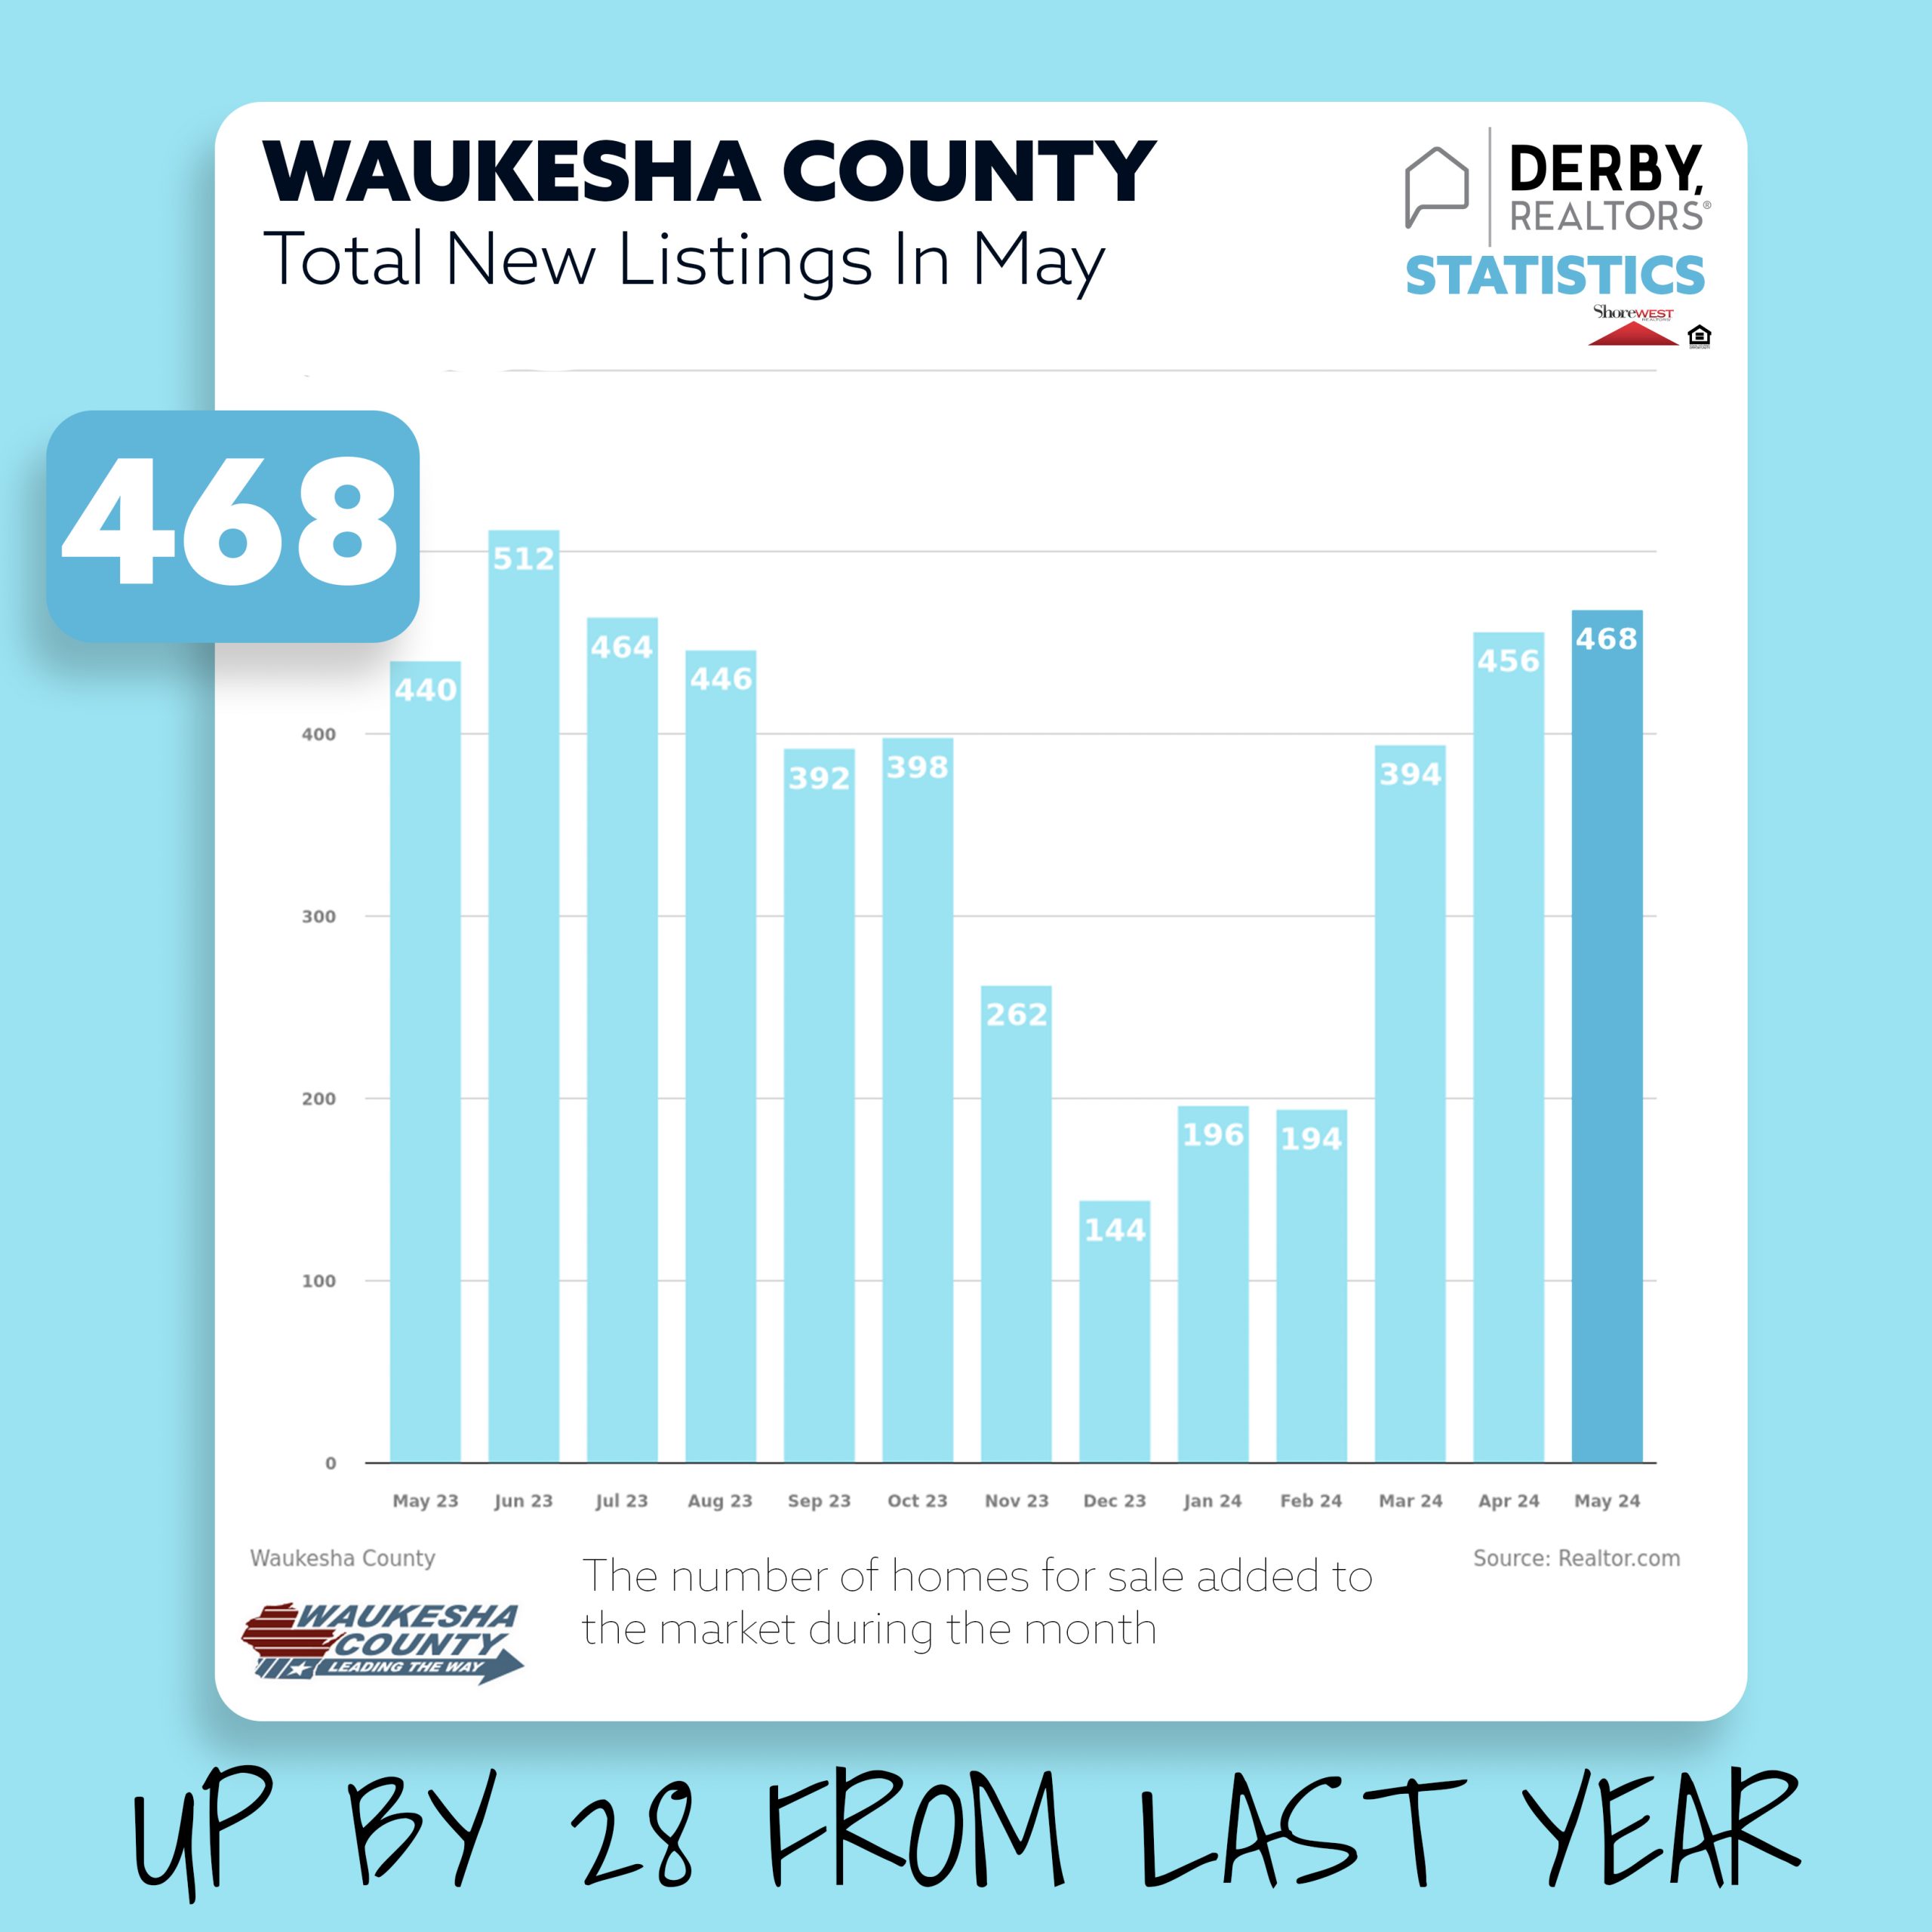 Derby Realtors - Sue Derby & Travis Derby - Shorewest Realtors Waukesha -Housing Data - Waukesha County Total New Listings